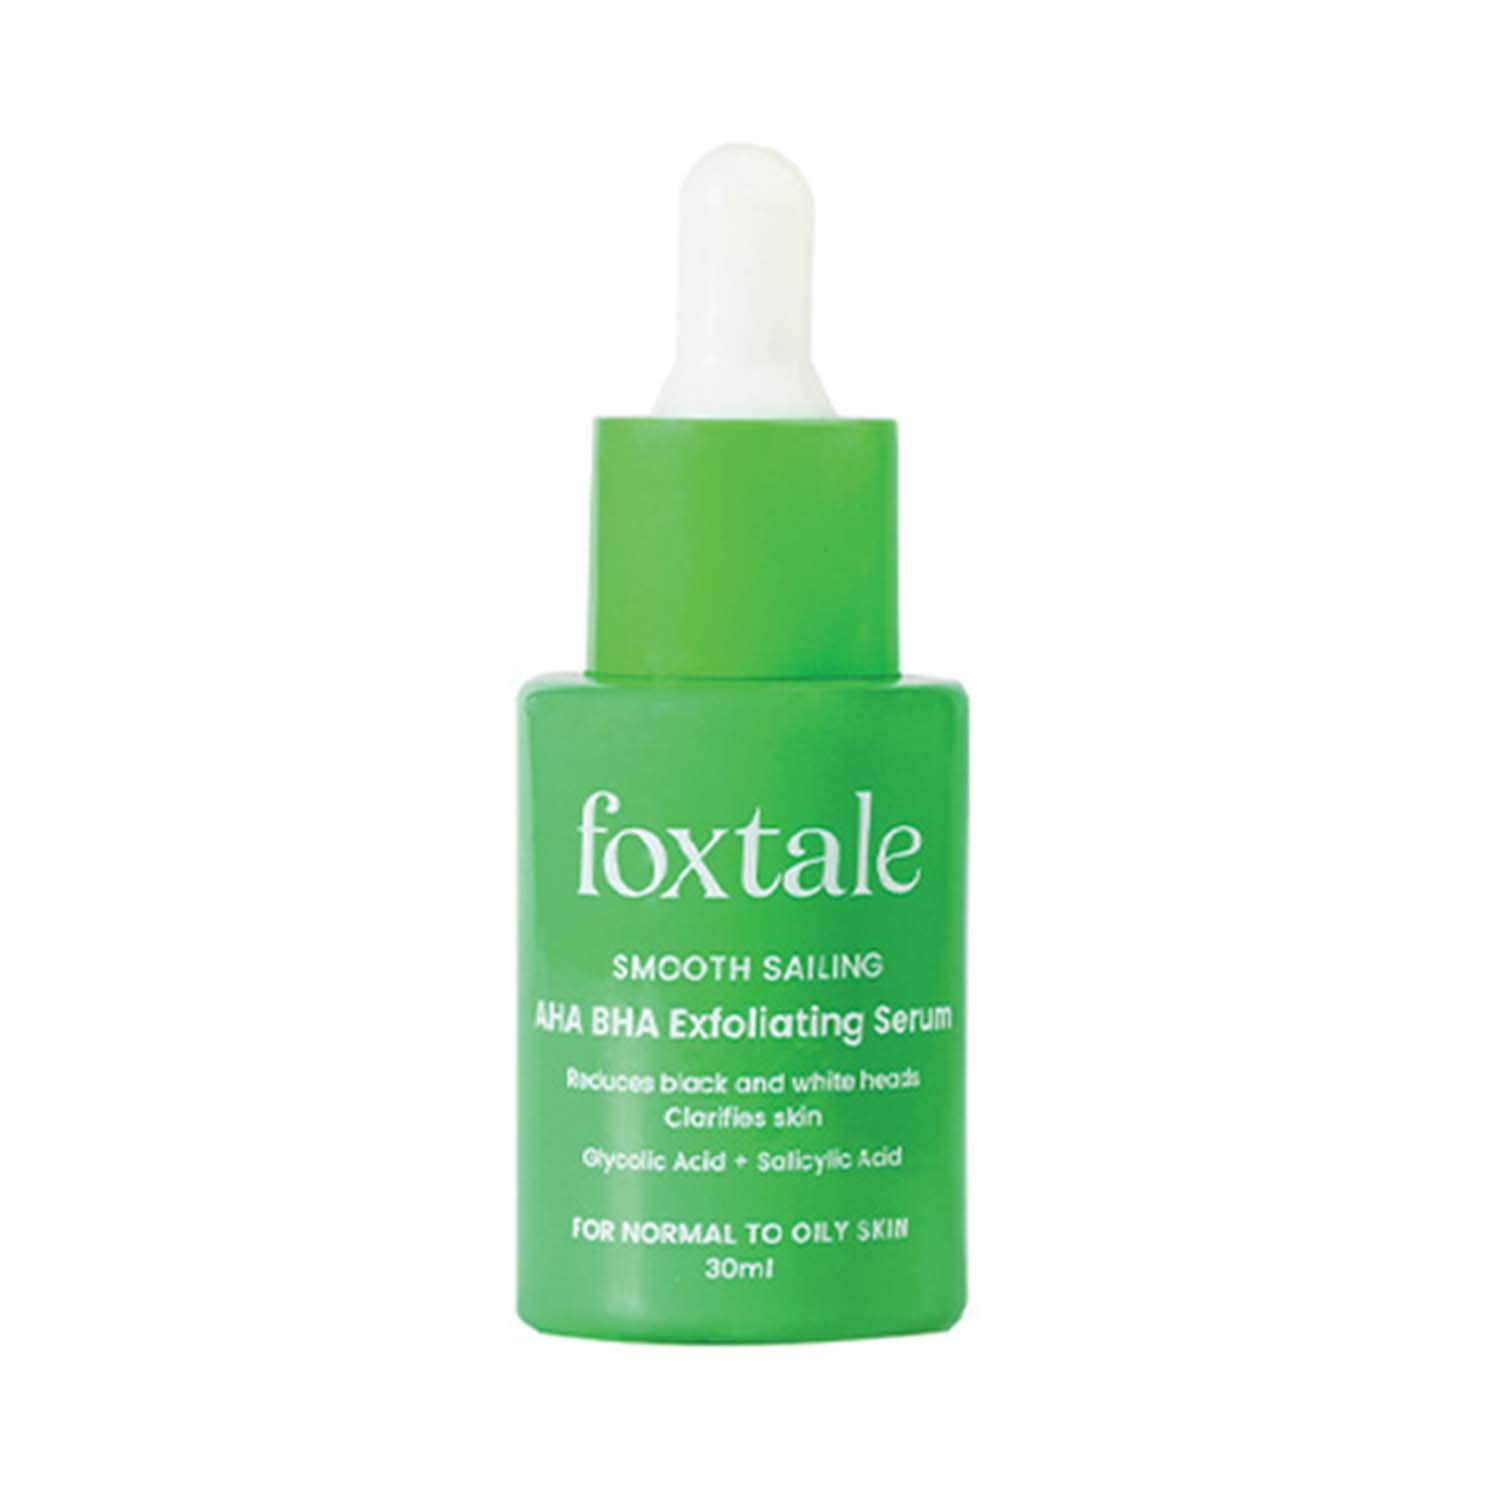 Foxtale | Foxtale Smooth Sailing AHA BHA Exfoliating Serum (30ml)